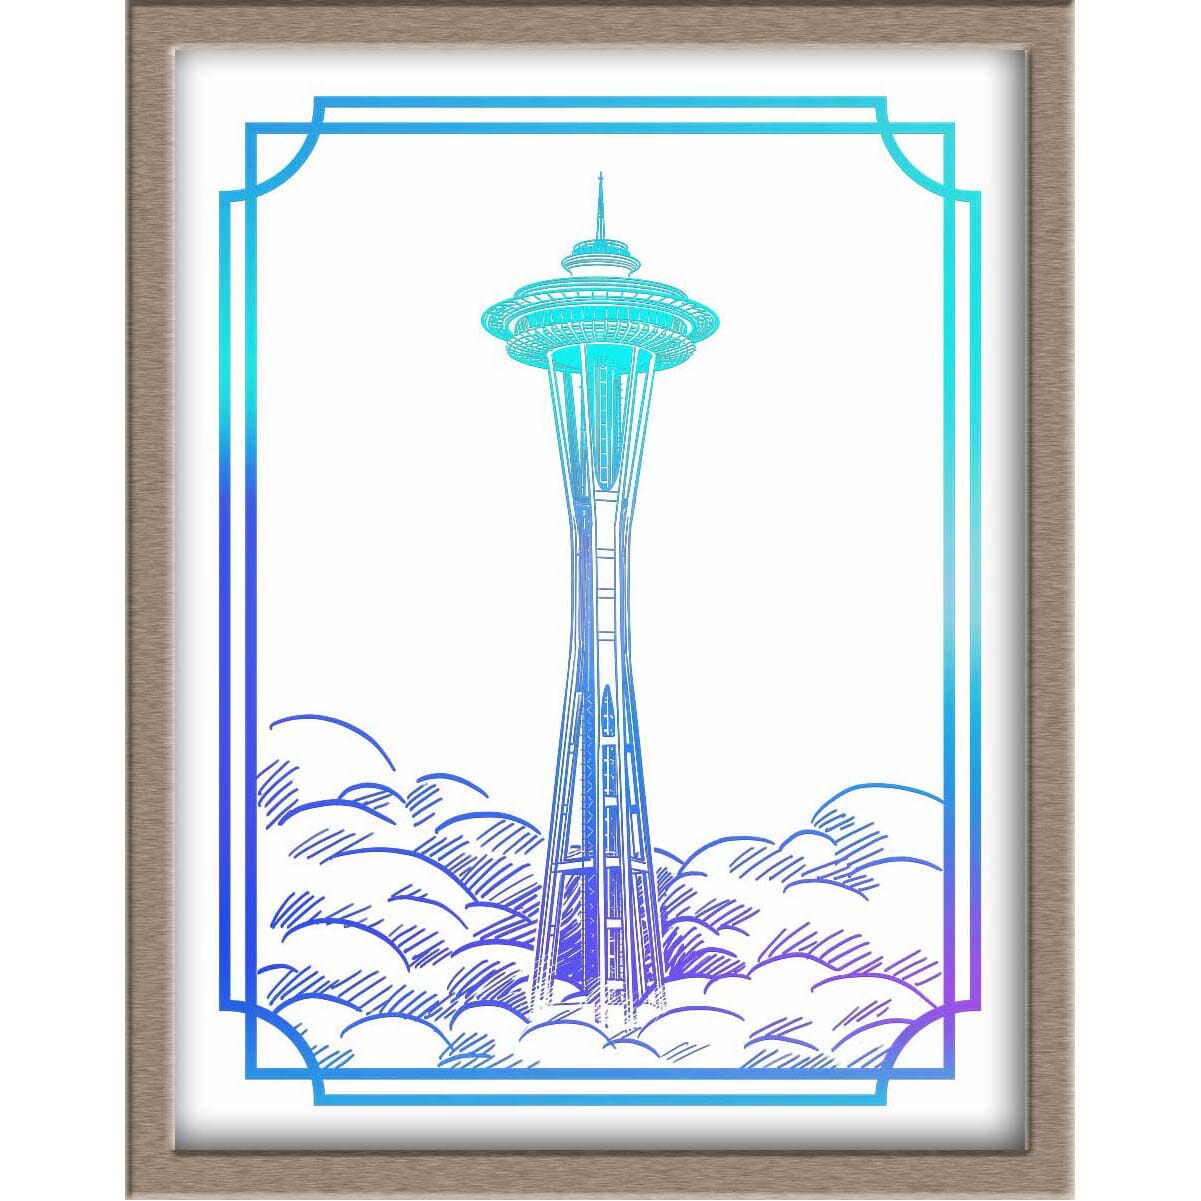 Seattle's Space Needle Landmark Foiled Print Posters, Prints, & Visual Artwork JoyousJoyfulJoyness 